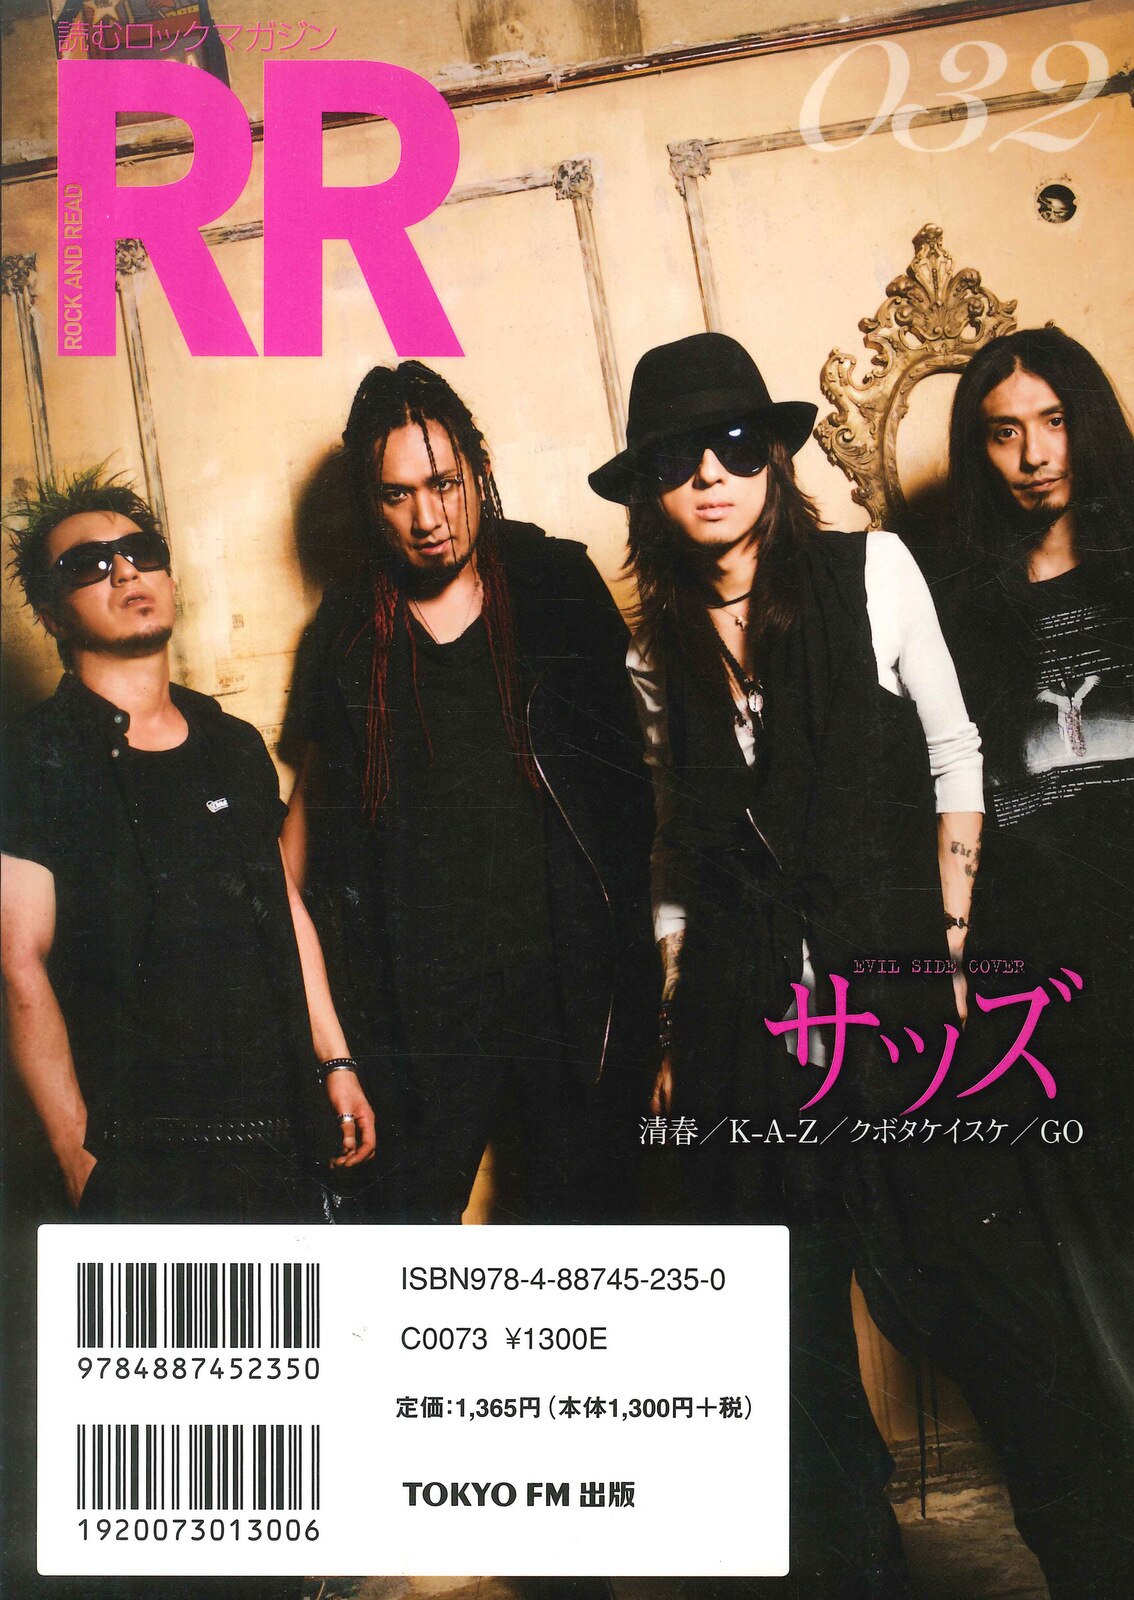 VAMPS(HYDE/K.A.Z) 2010年8月20日発行/雑誌 ROCK AND READ 032 | ありある | まんだらけ MANDARAKE